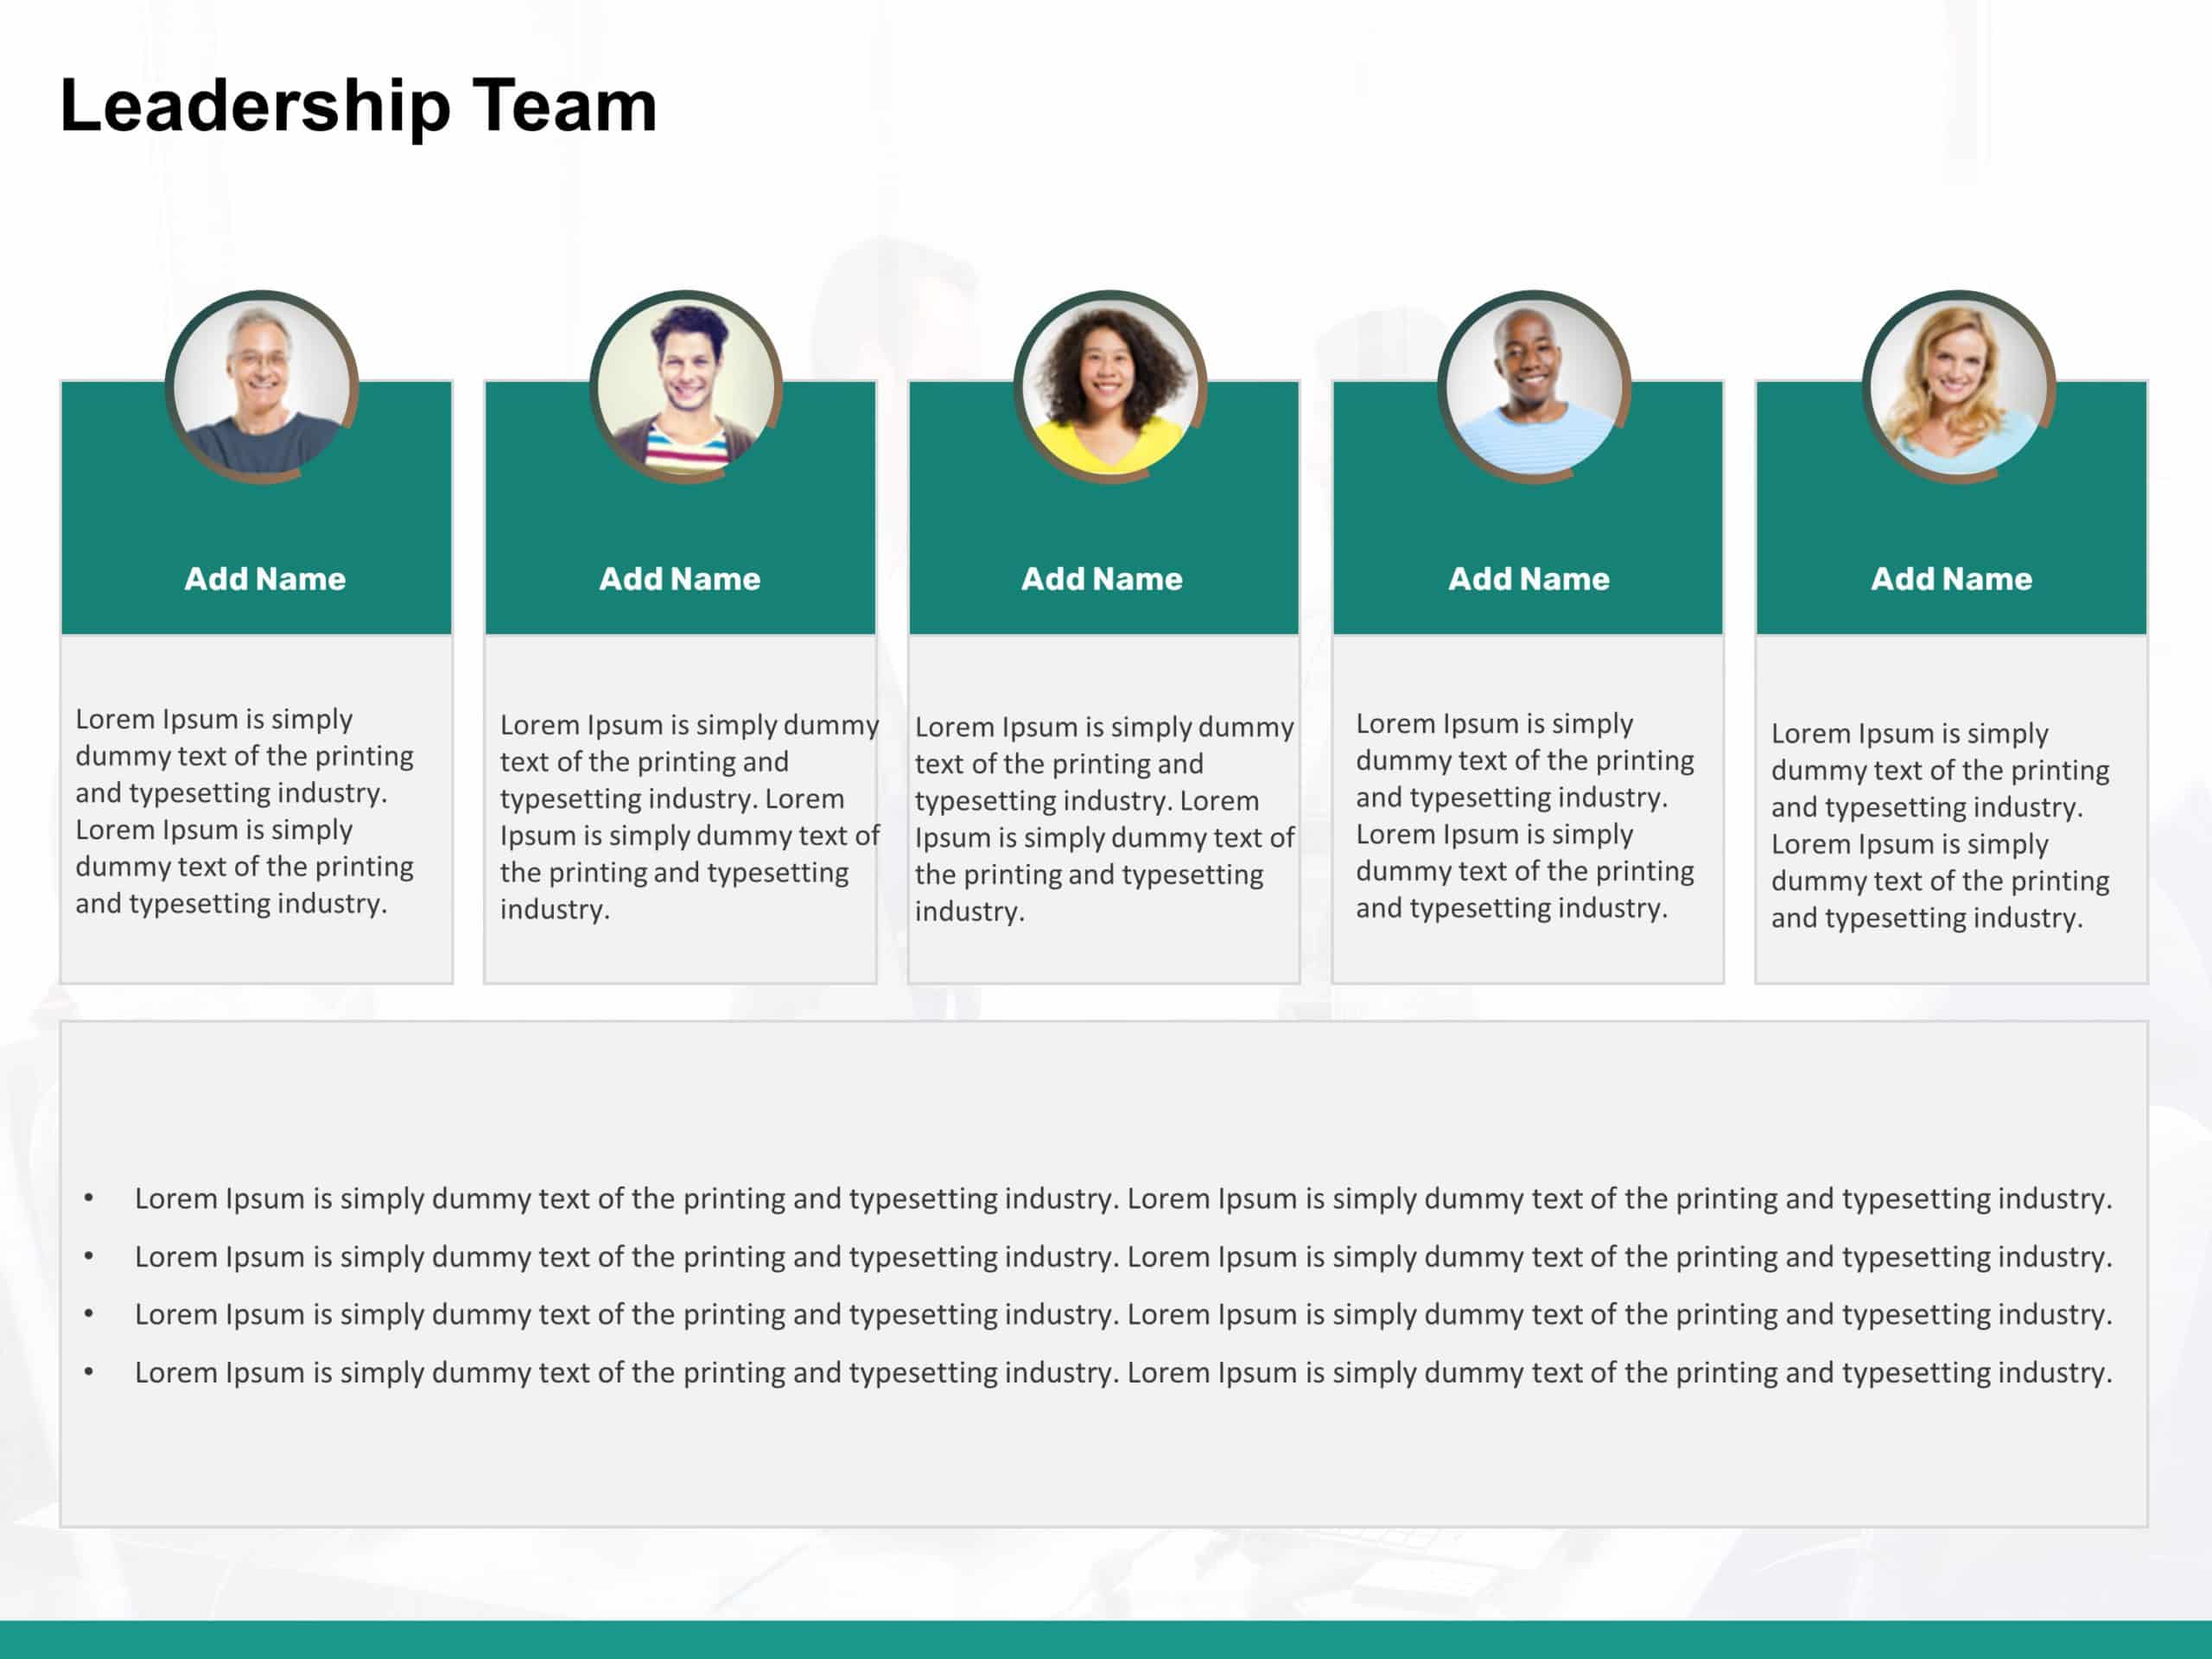 Senior Leadership Team PowerPoint Template